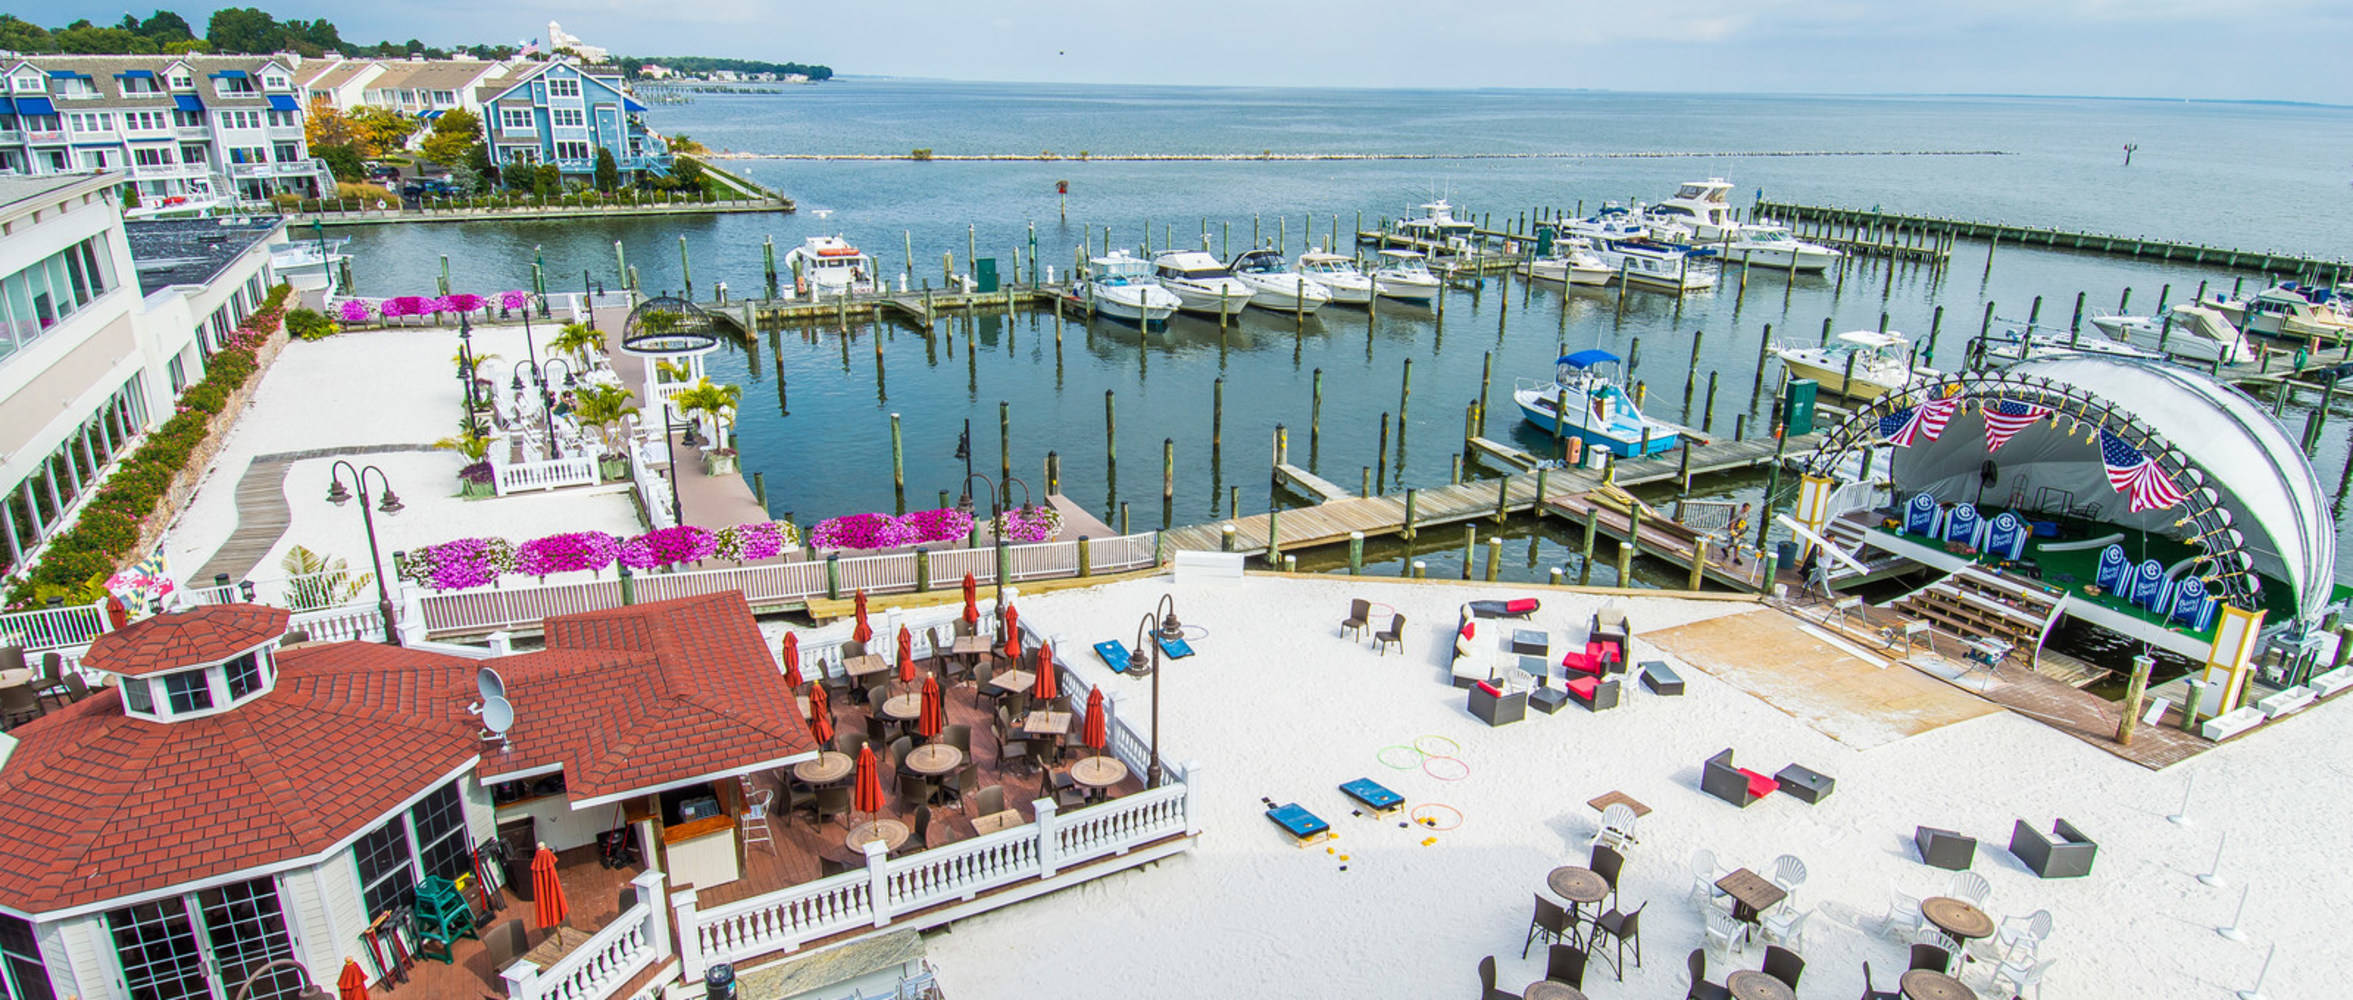 Rod 'N' Reel Resort Marina - Chesapeake Bay Marina - Maryland Marina - Marinalife